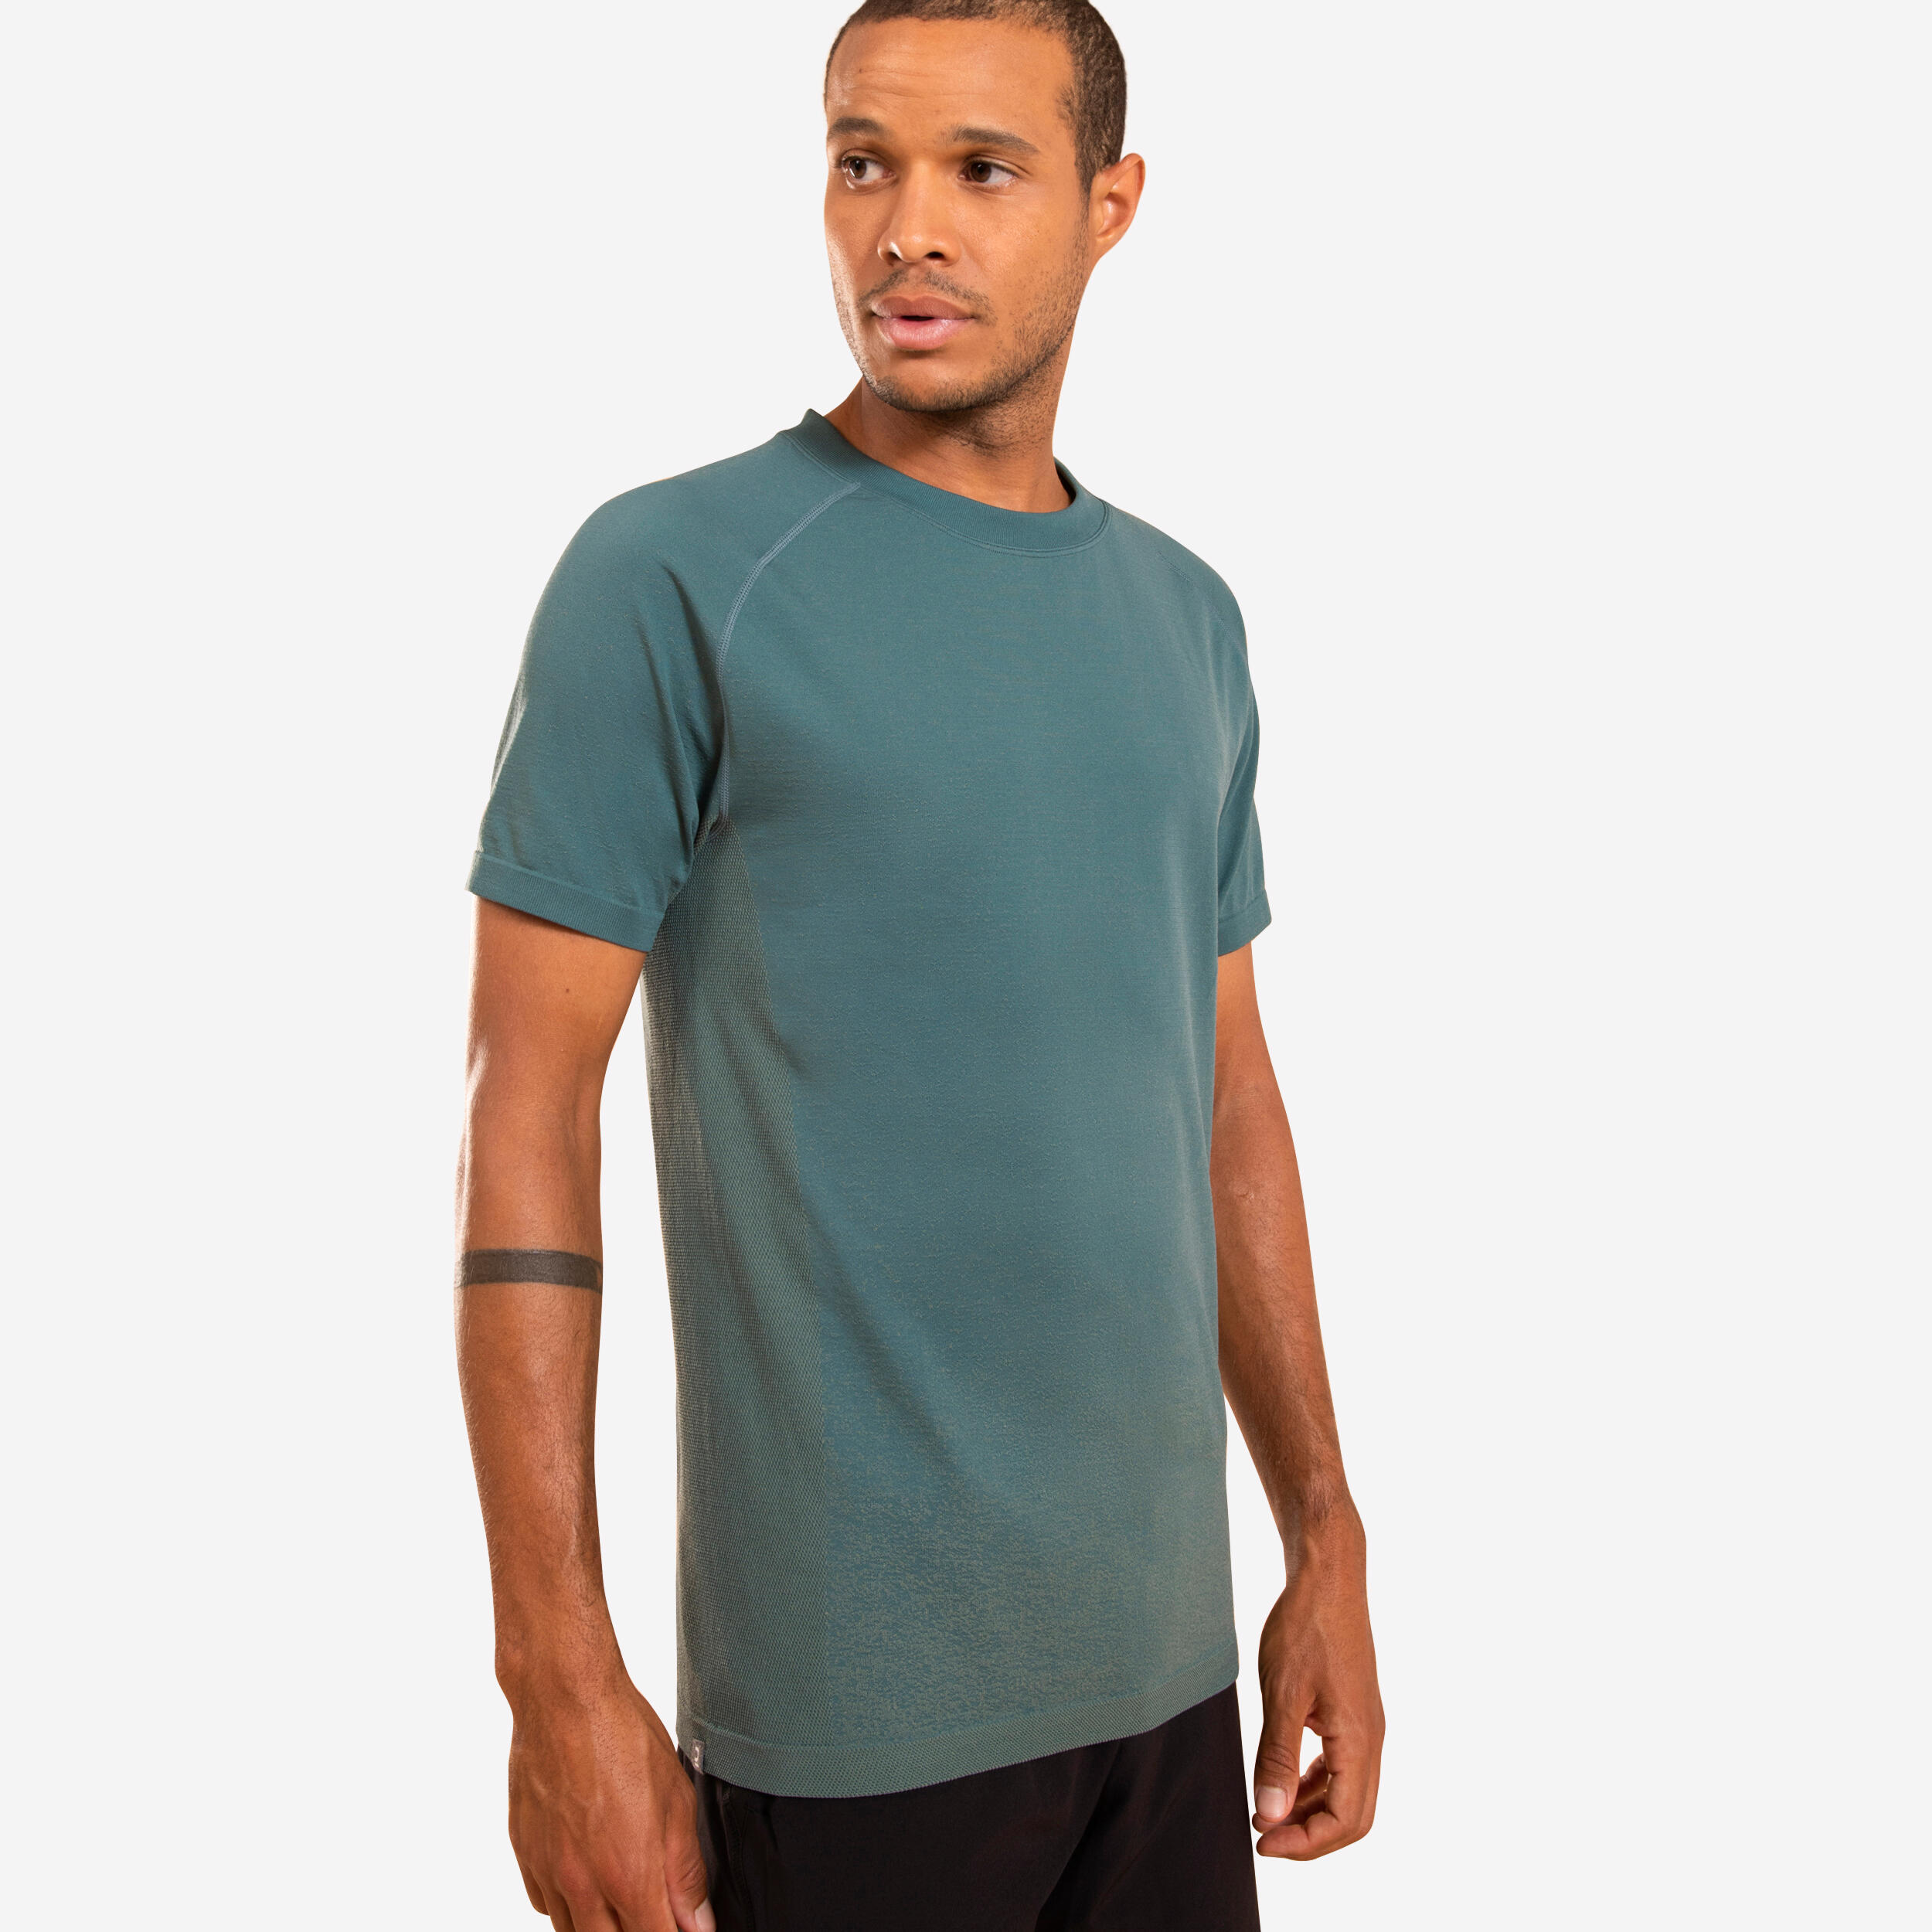 KIMJALY Men's Seamless Short-Sleeved Dynamic Yoga T-Shirt - Khaki